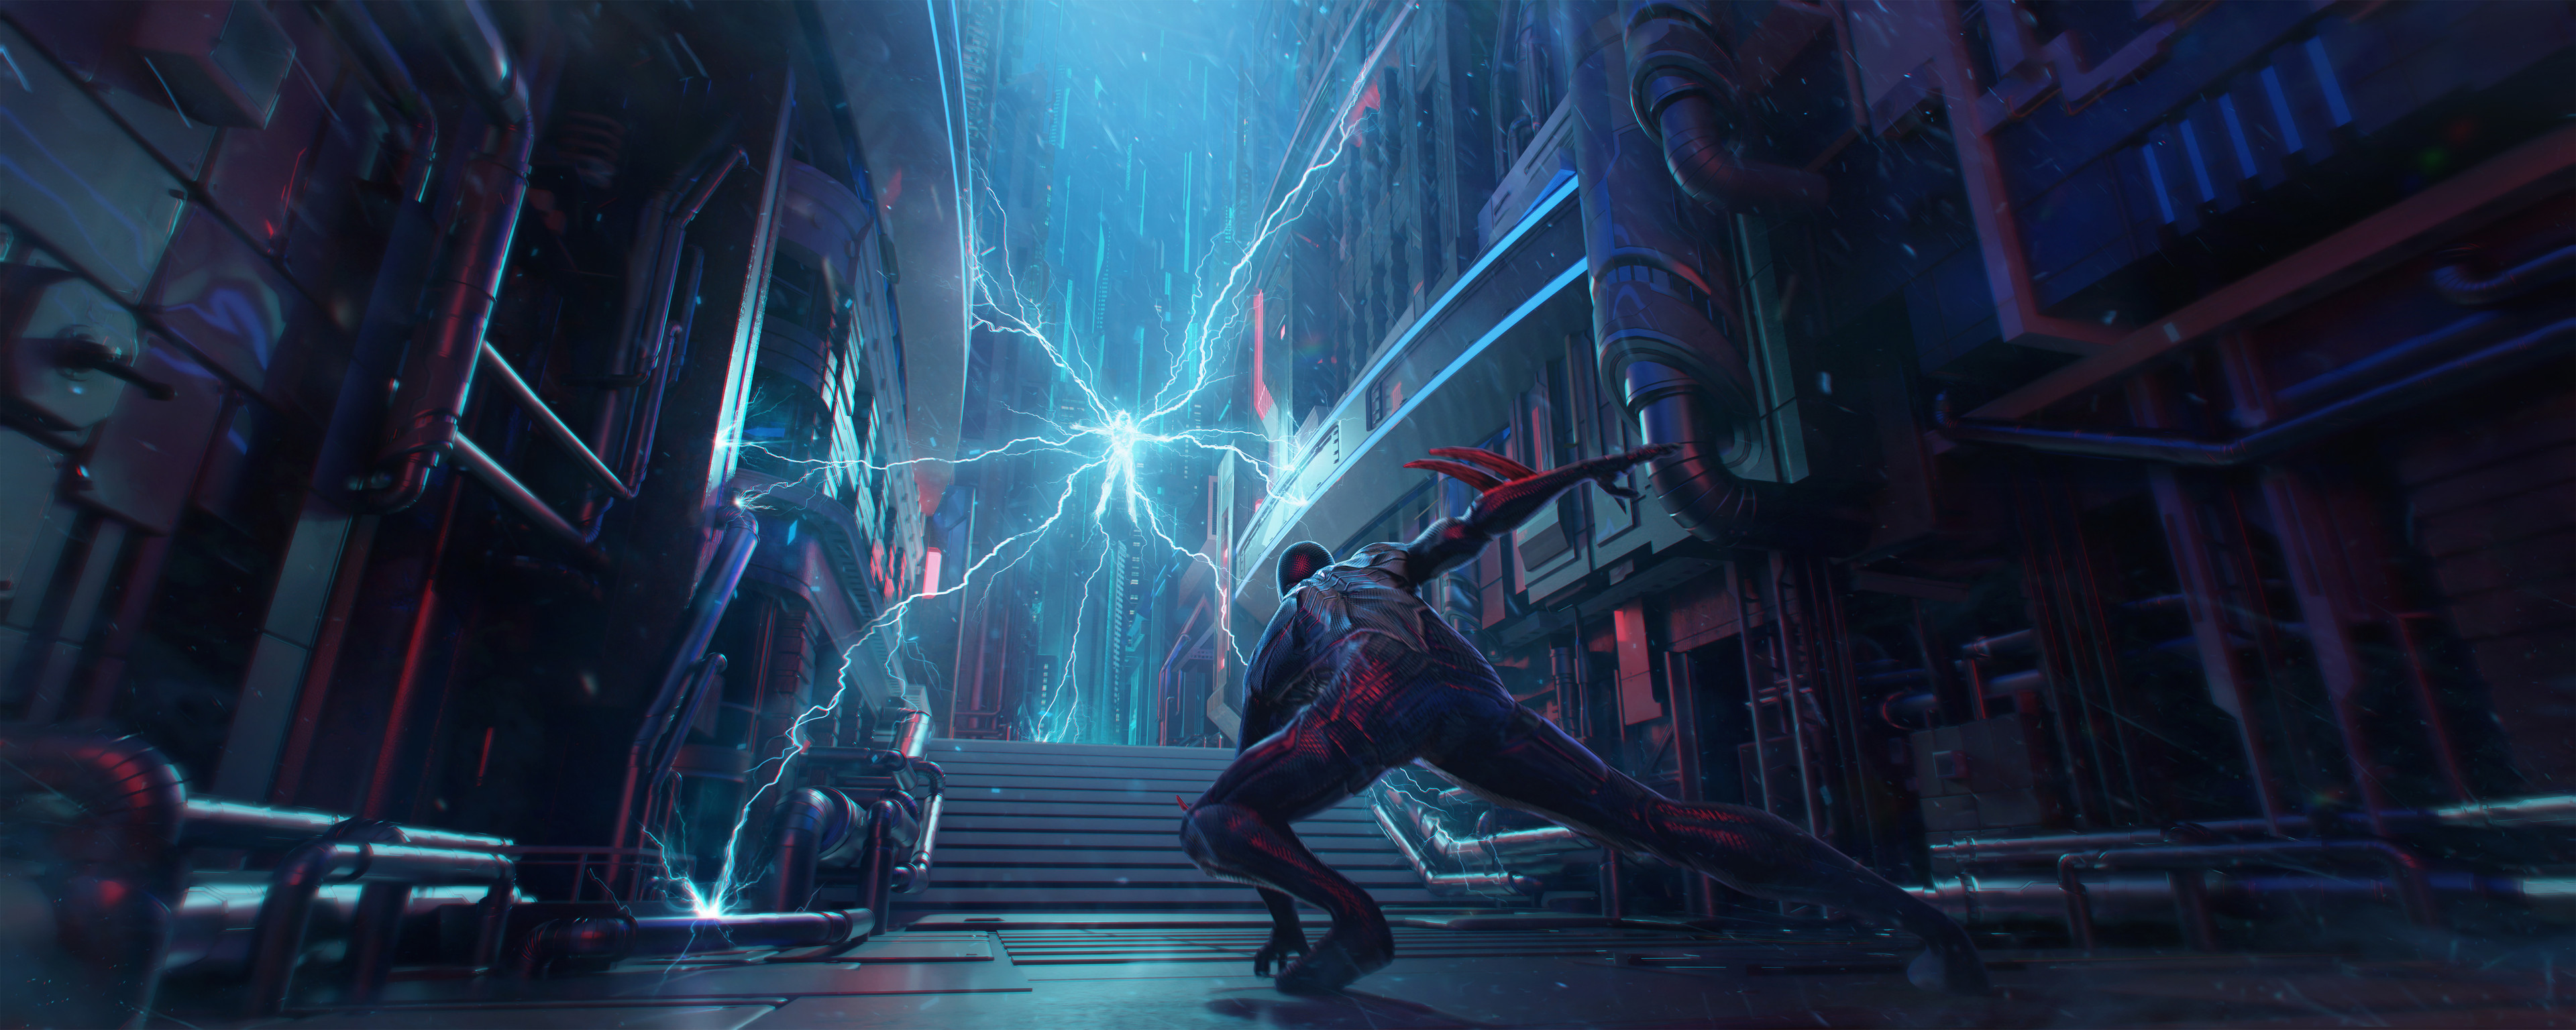 General 3840x1536 Rutger van de Steeg fan art digital art artwork superhero Marvel Comics Spider-Man fighting electricity science fiction Spider-Man 2099 stairs